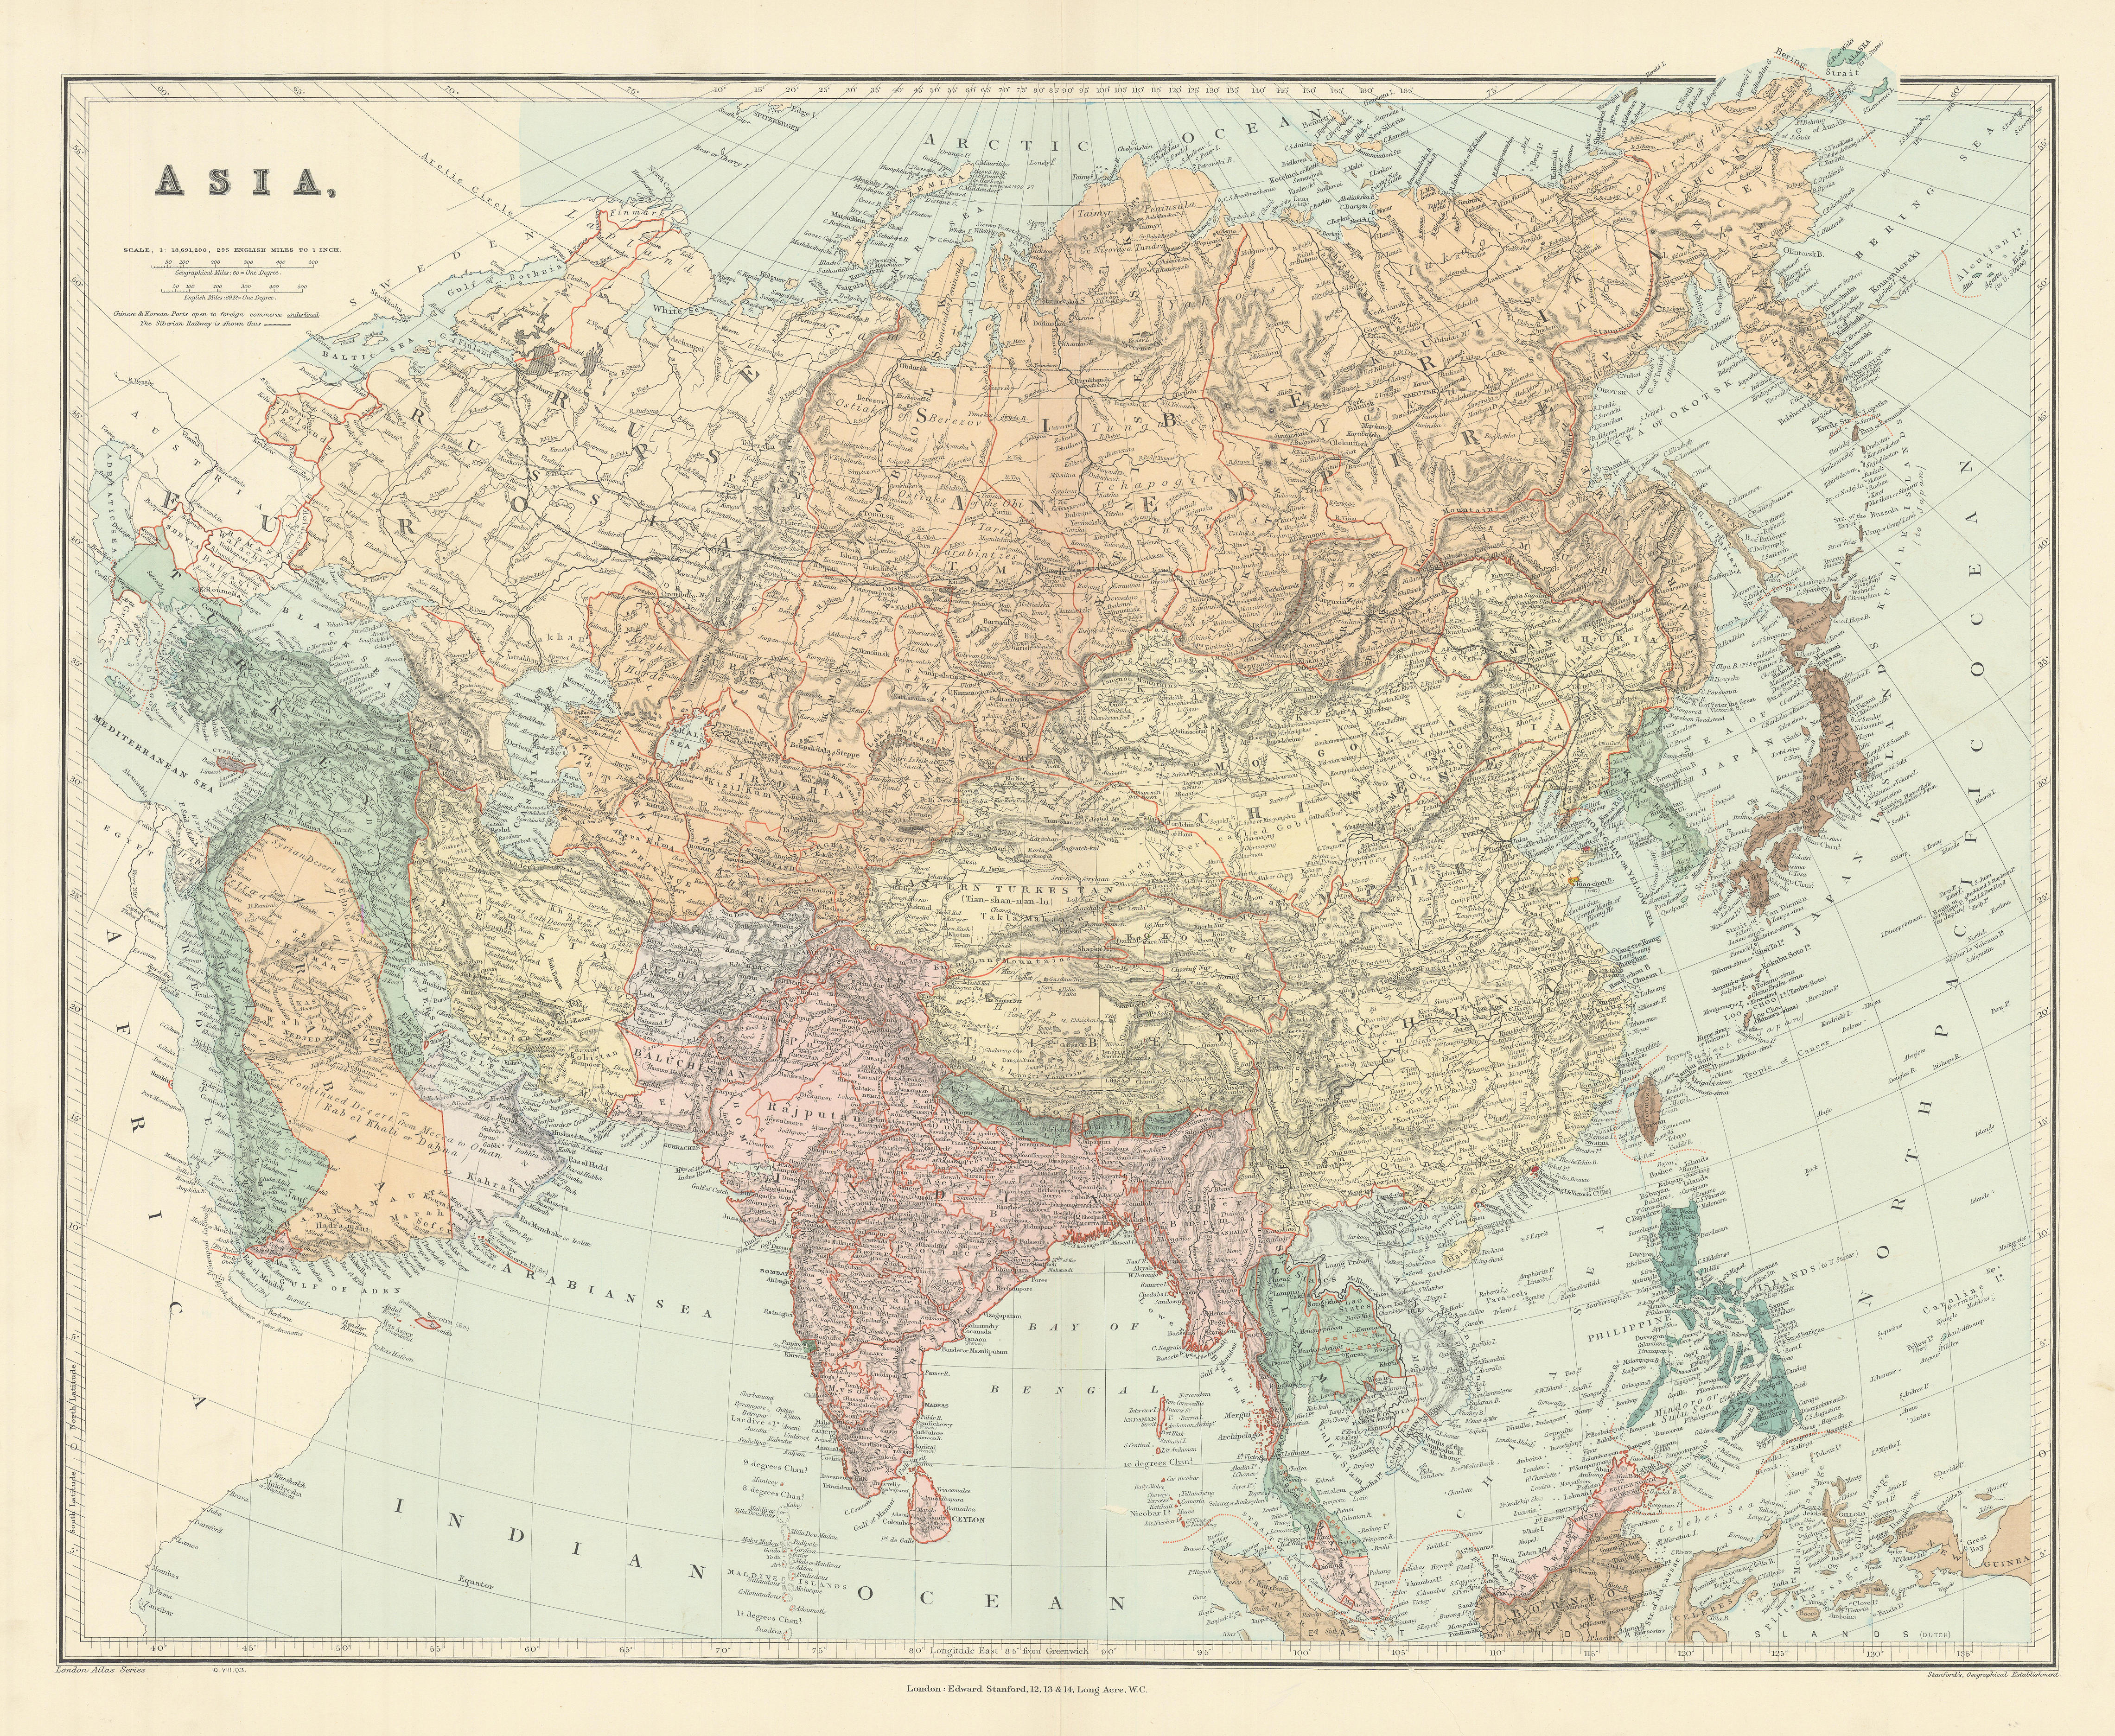 ASIA Japanese Formosa British India Siam Oman Abu Debi (Dhabi) STANFORD 1904 map